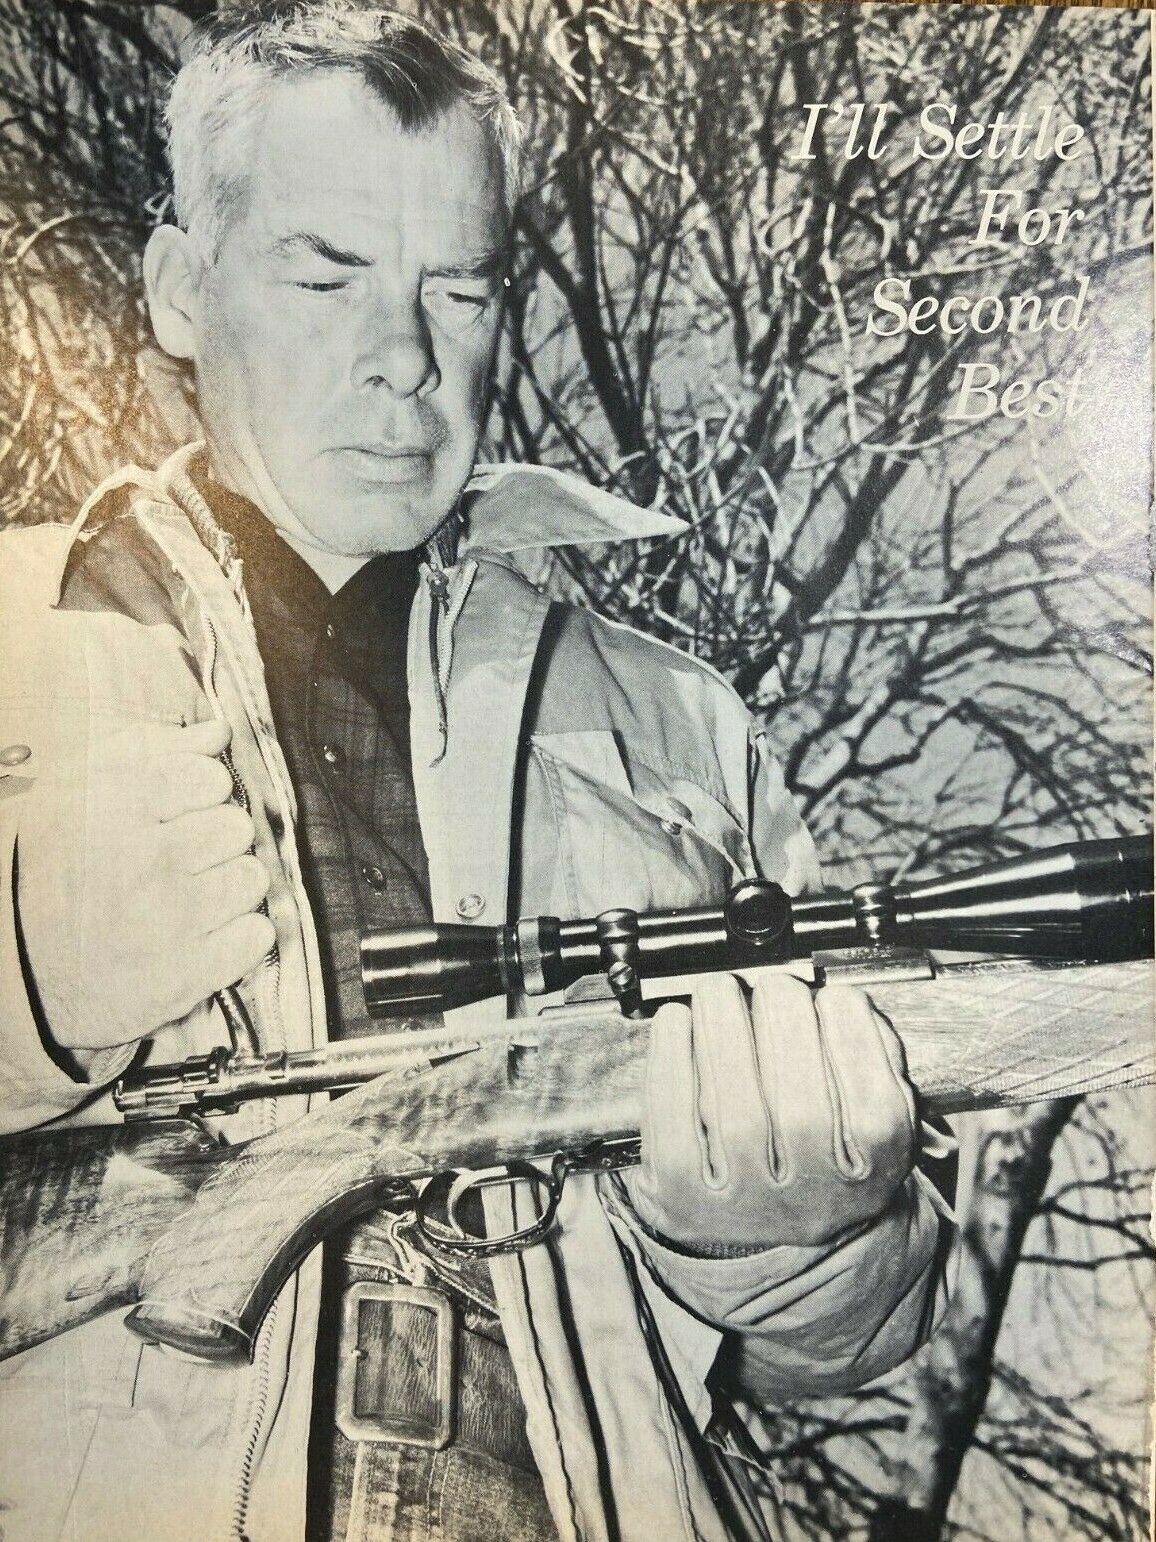 1964 Actor Lee Marvin Hunting Elk in Colorado illustrated